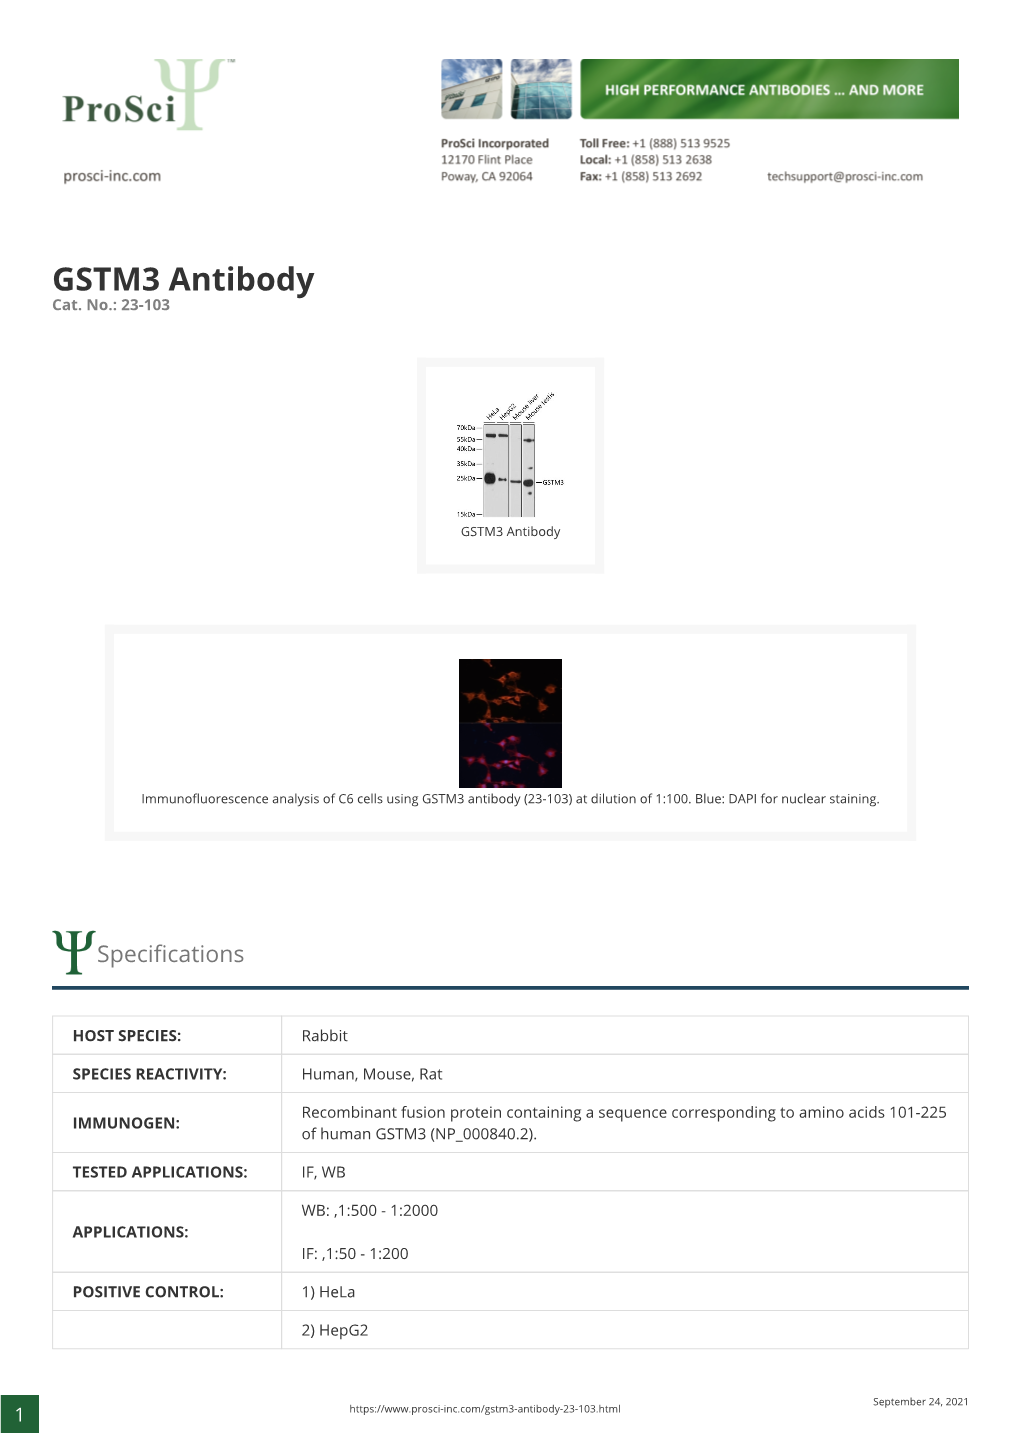 GSTM3 Antibody Cat